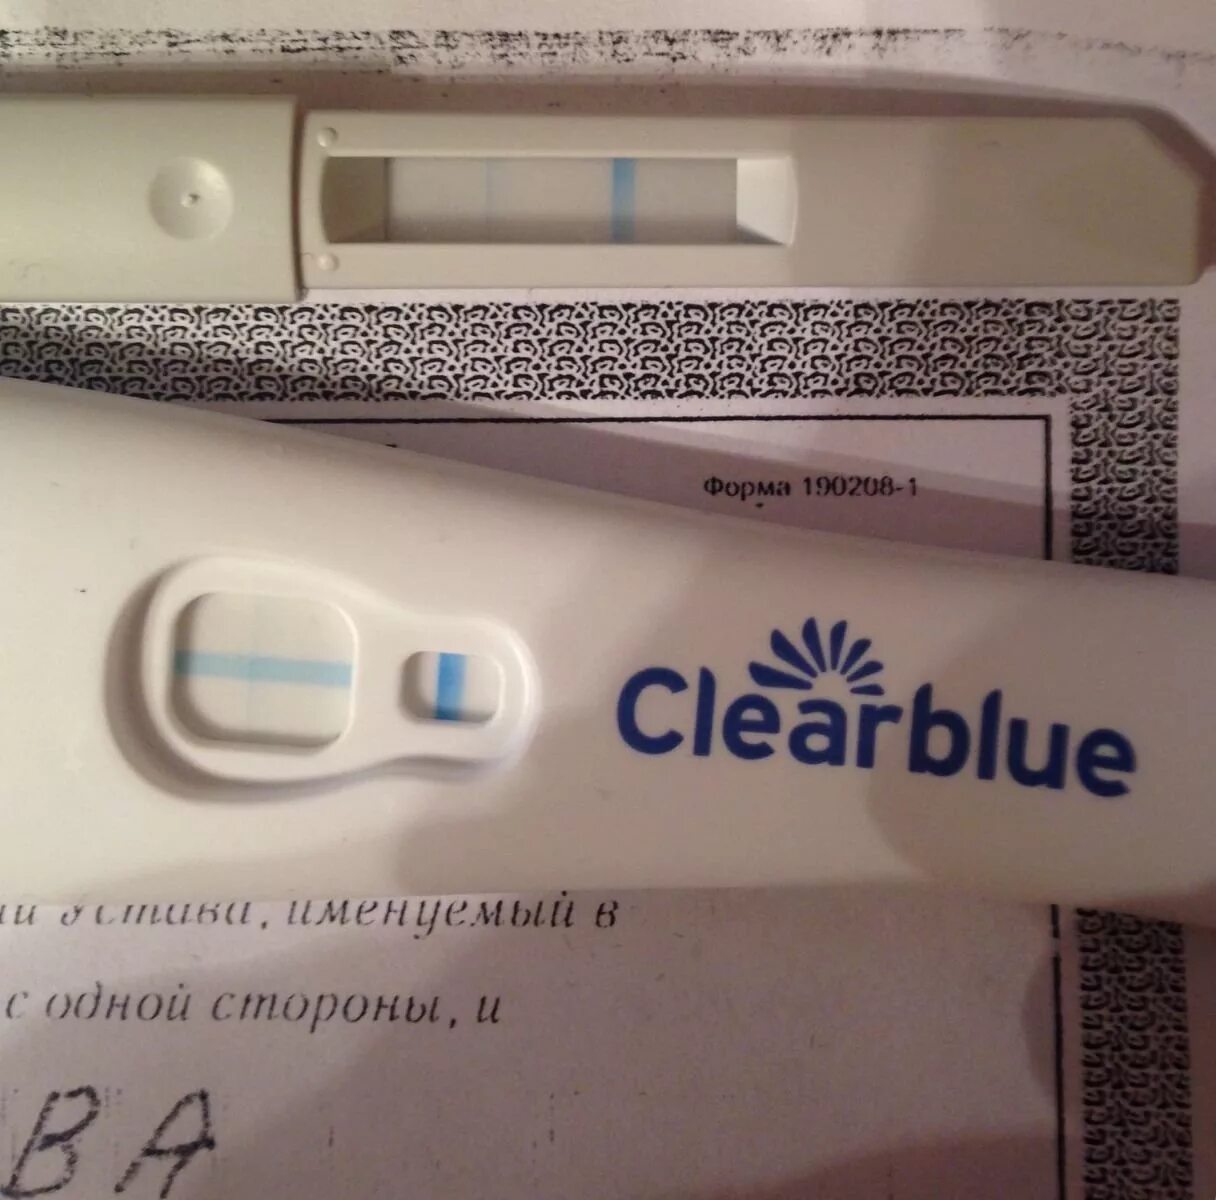 Тест clearblue до задержки. Тест на беременность Clearblue за 5 дней до задержки. Струйный тест клеар Блю за 5 дней до задержки. Клеар Блю тест на беременность 5 дней задержки. Тест клиаблу за 5 дней до задержки положительный.